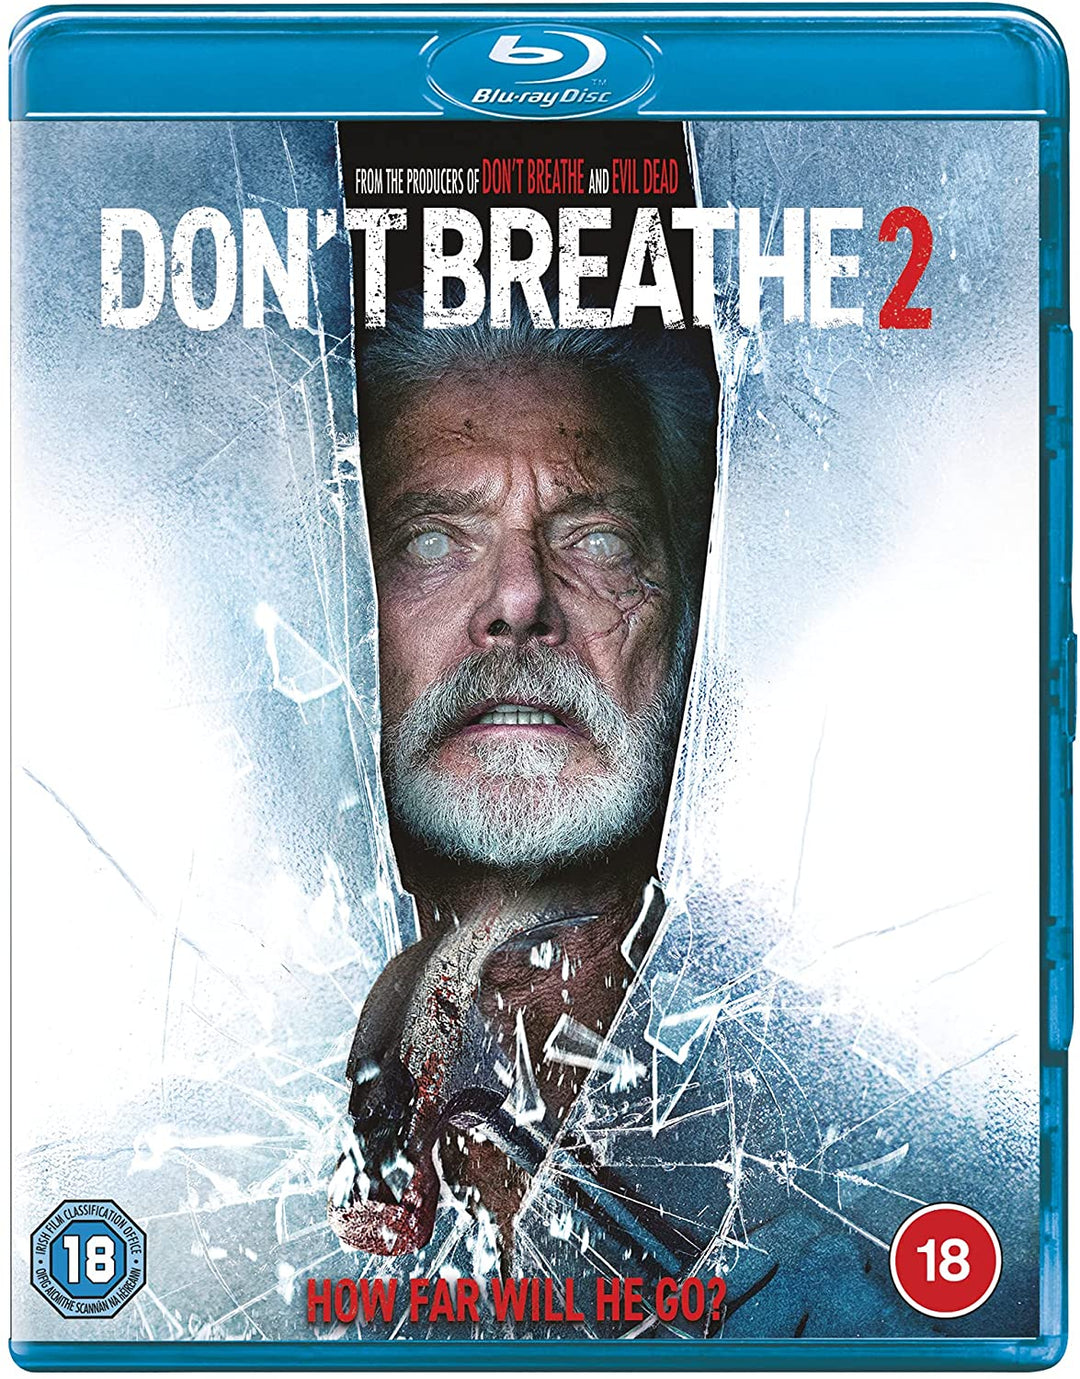 Don't Breathe 2 [2021] – Horror/Thriller [Blu-ray]